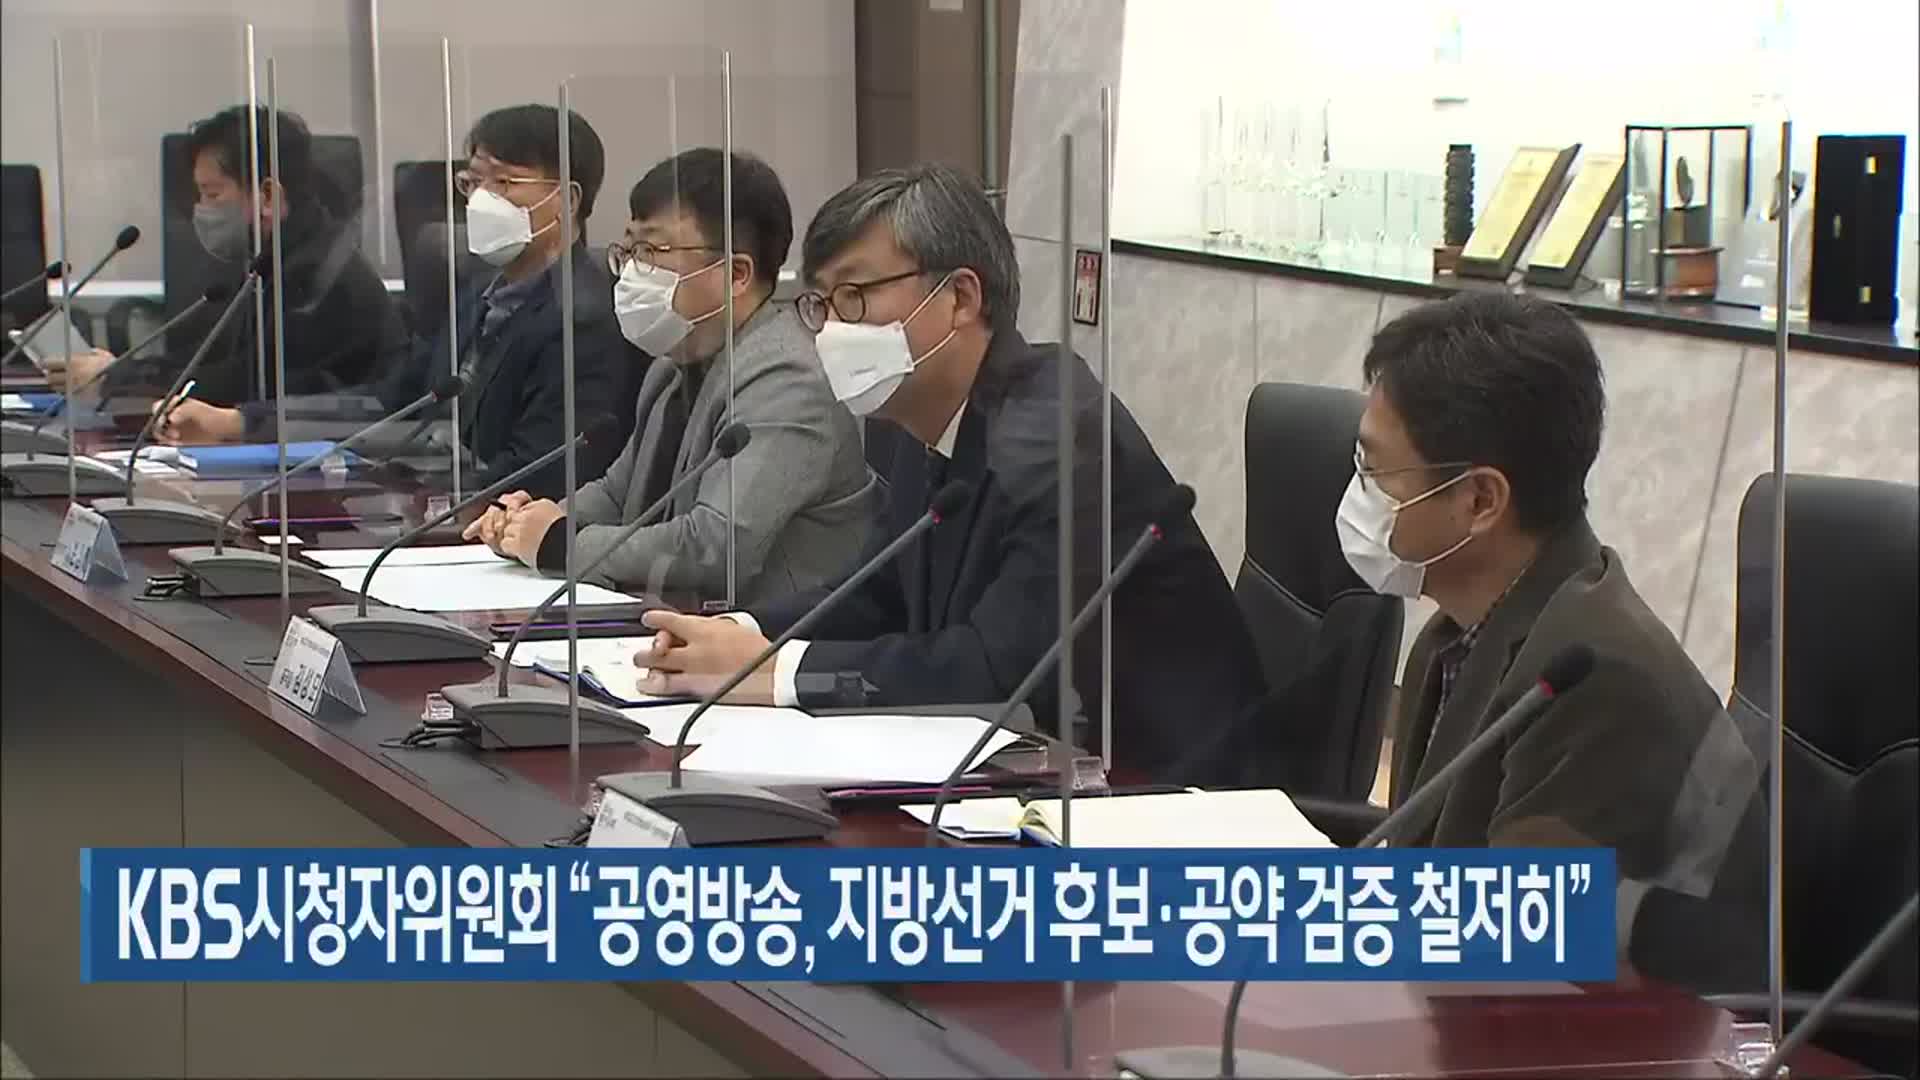 KBS시청자위원회 “공영방송, 지방선거 후보·공약 검증 철저히”